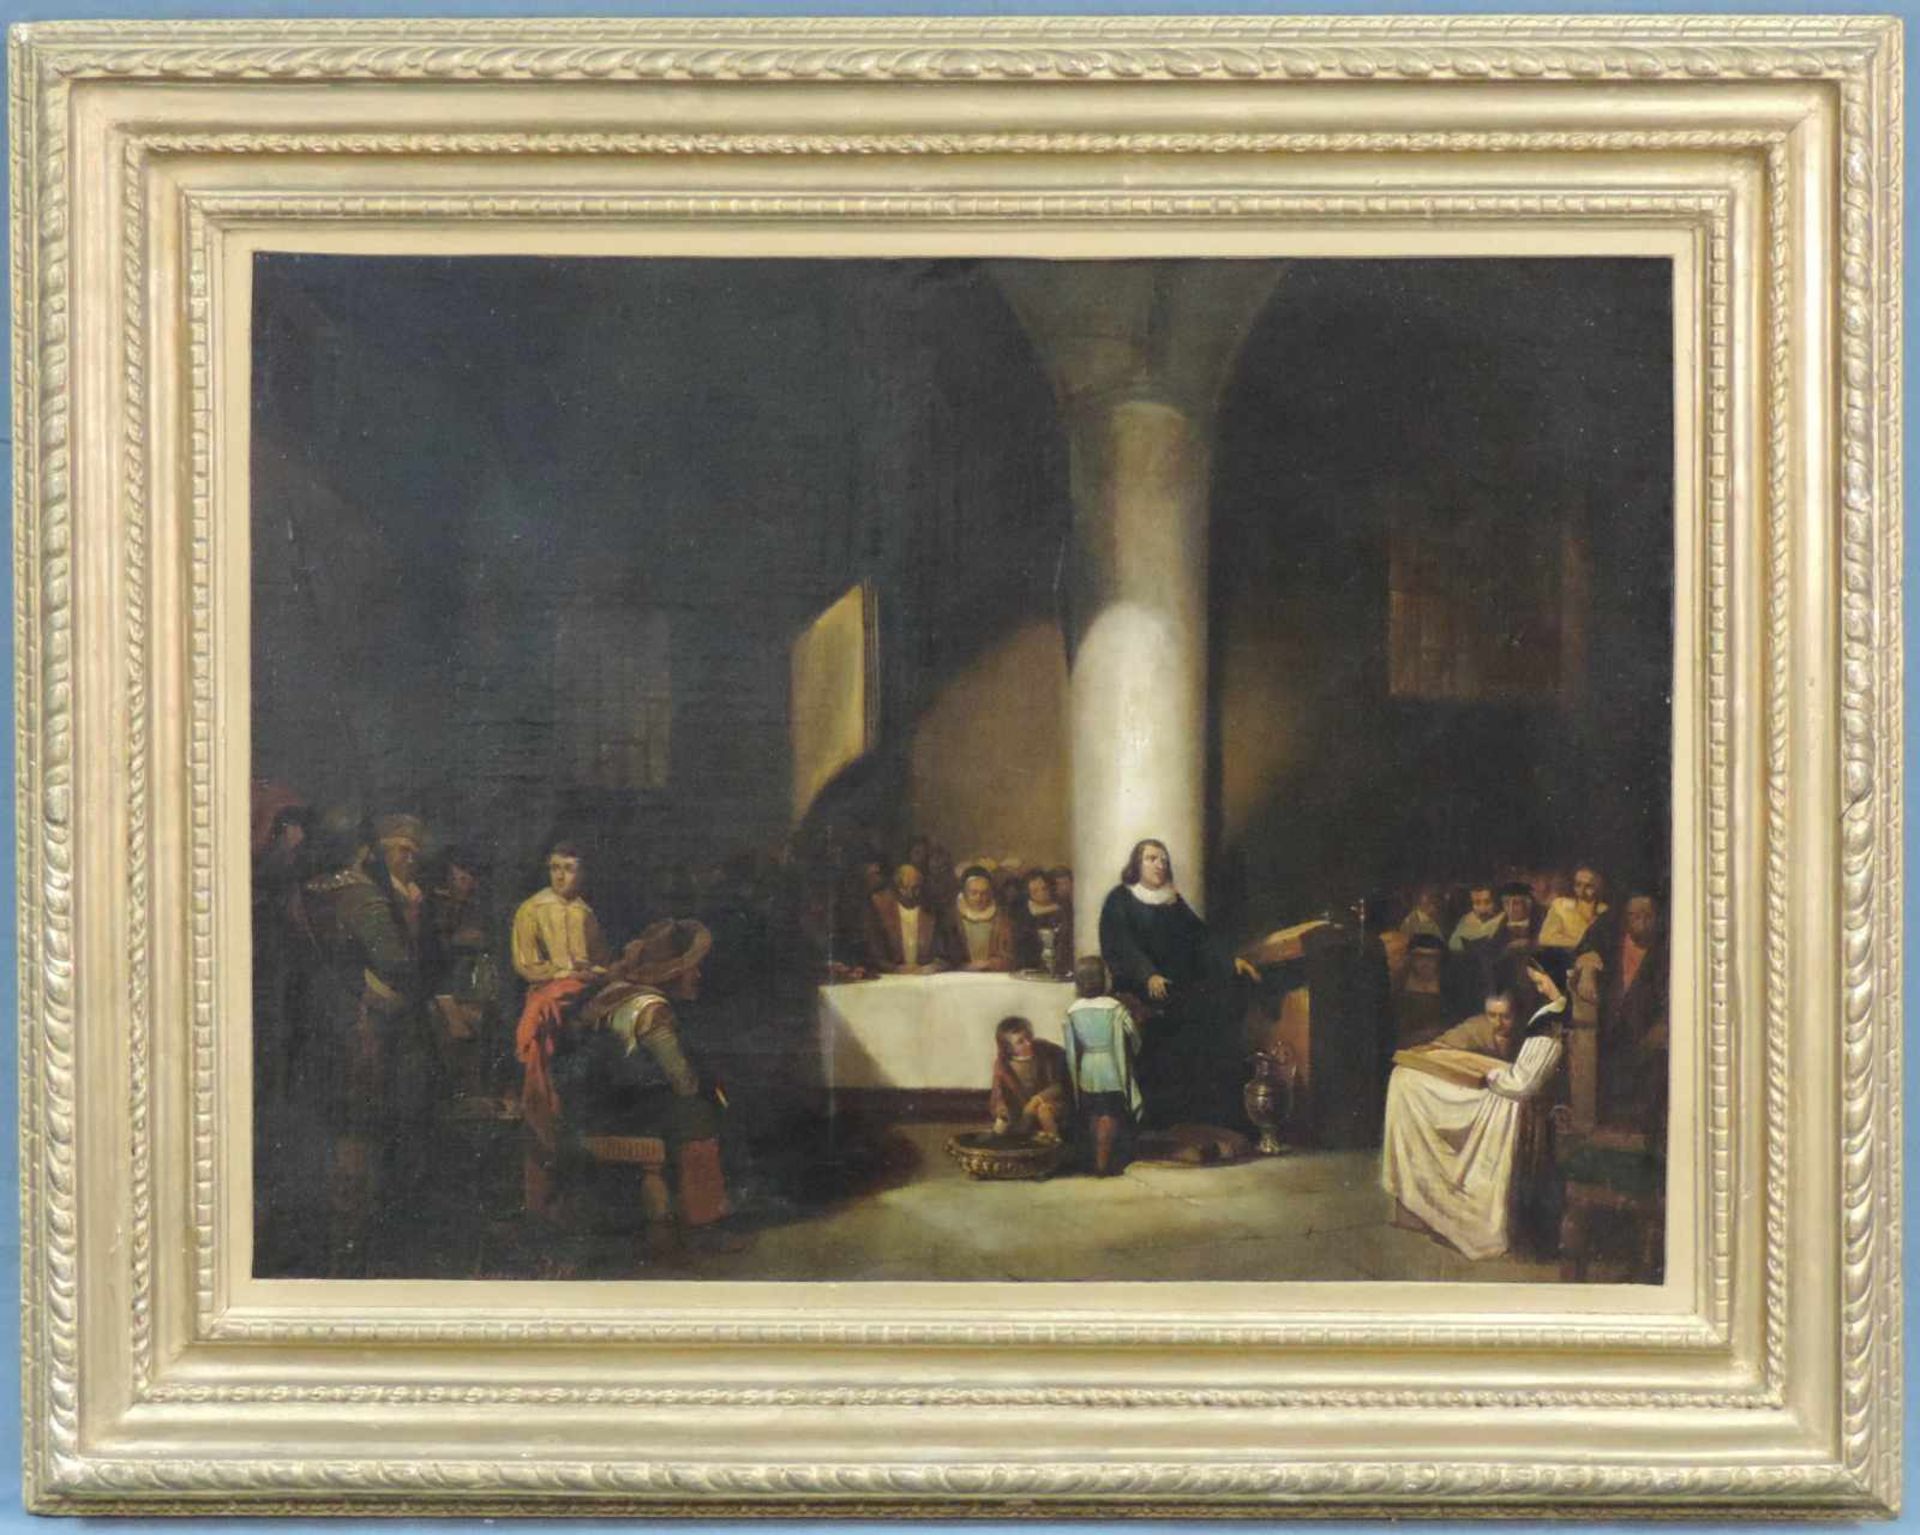 Abraham VAN DER PELT (1815 - 1895). Bibellesung. 54 cm x 74 cm. Gemälde. Öl auf Leinwand. Signiert